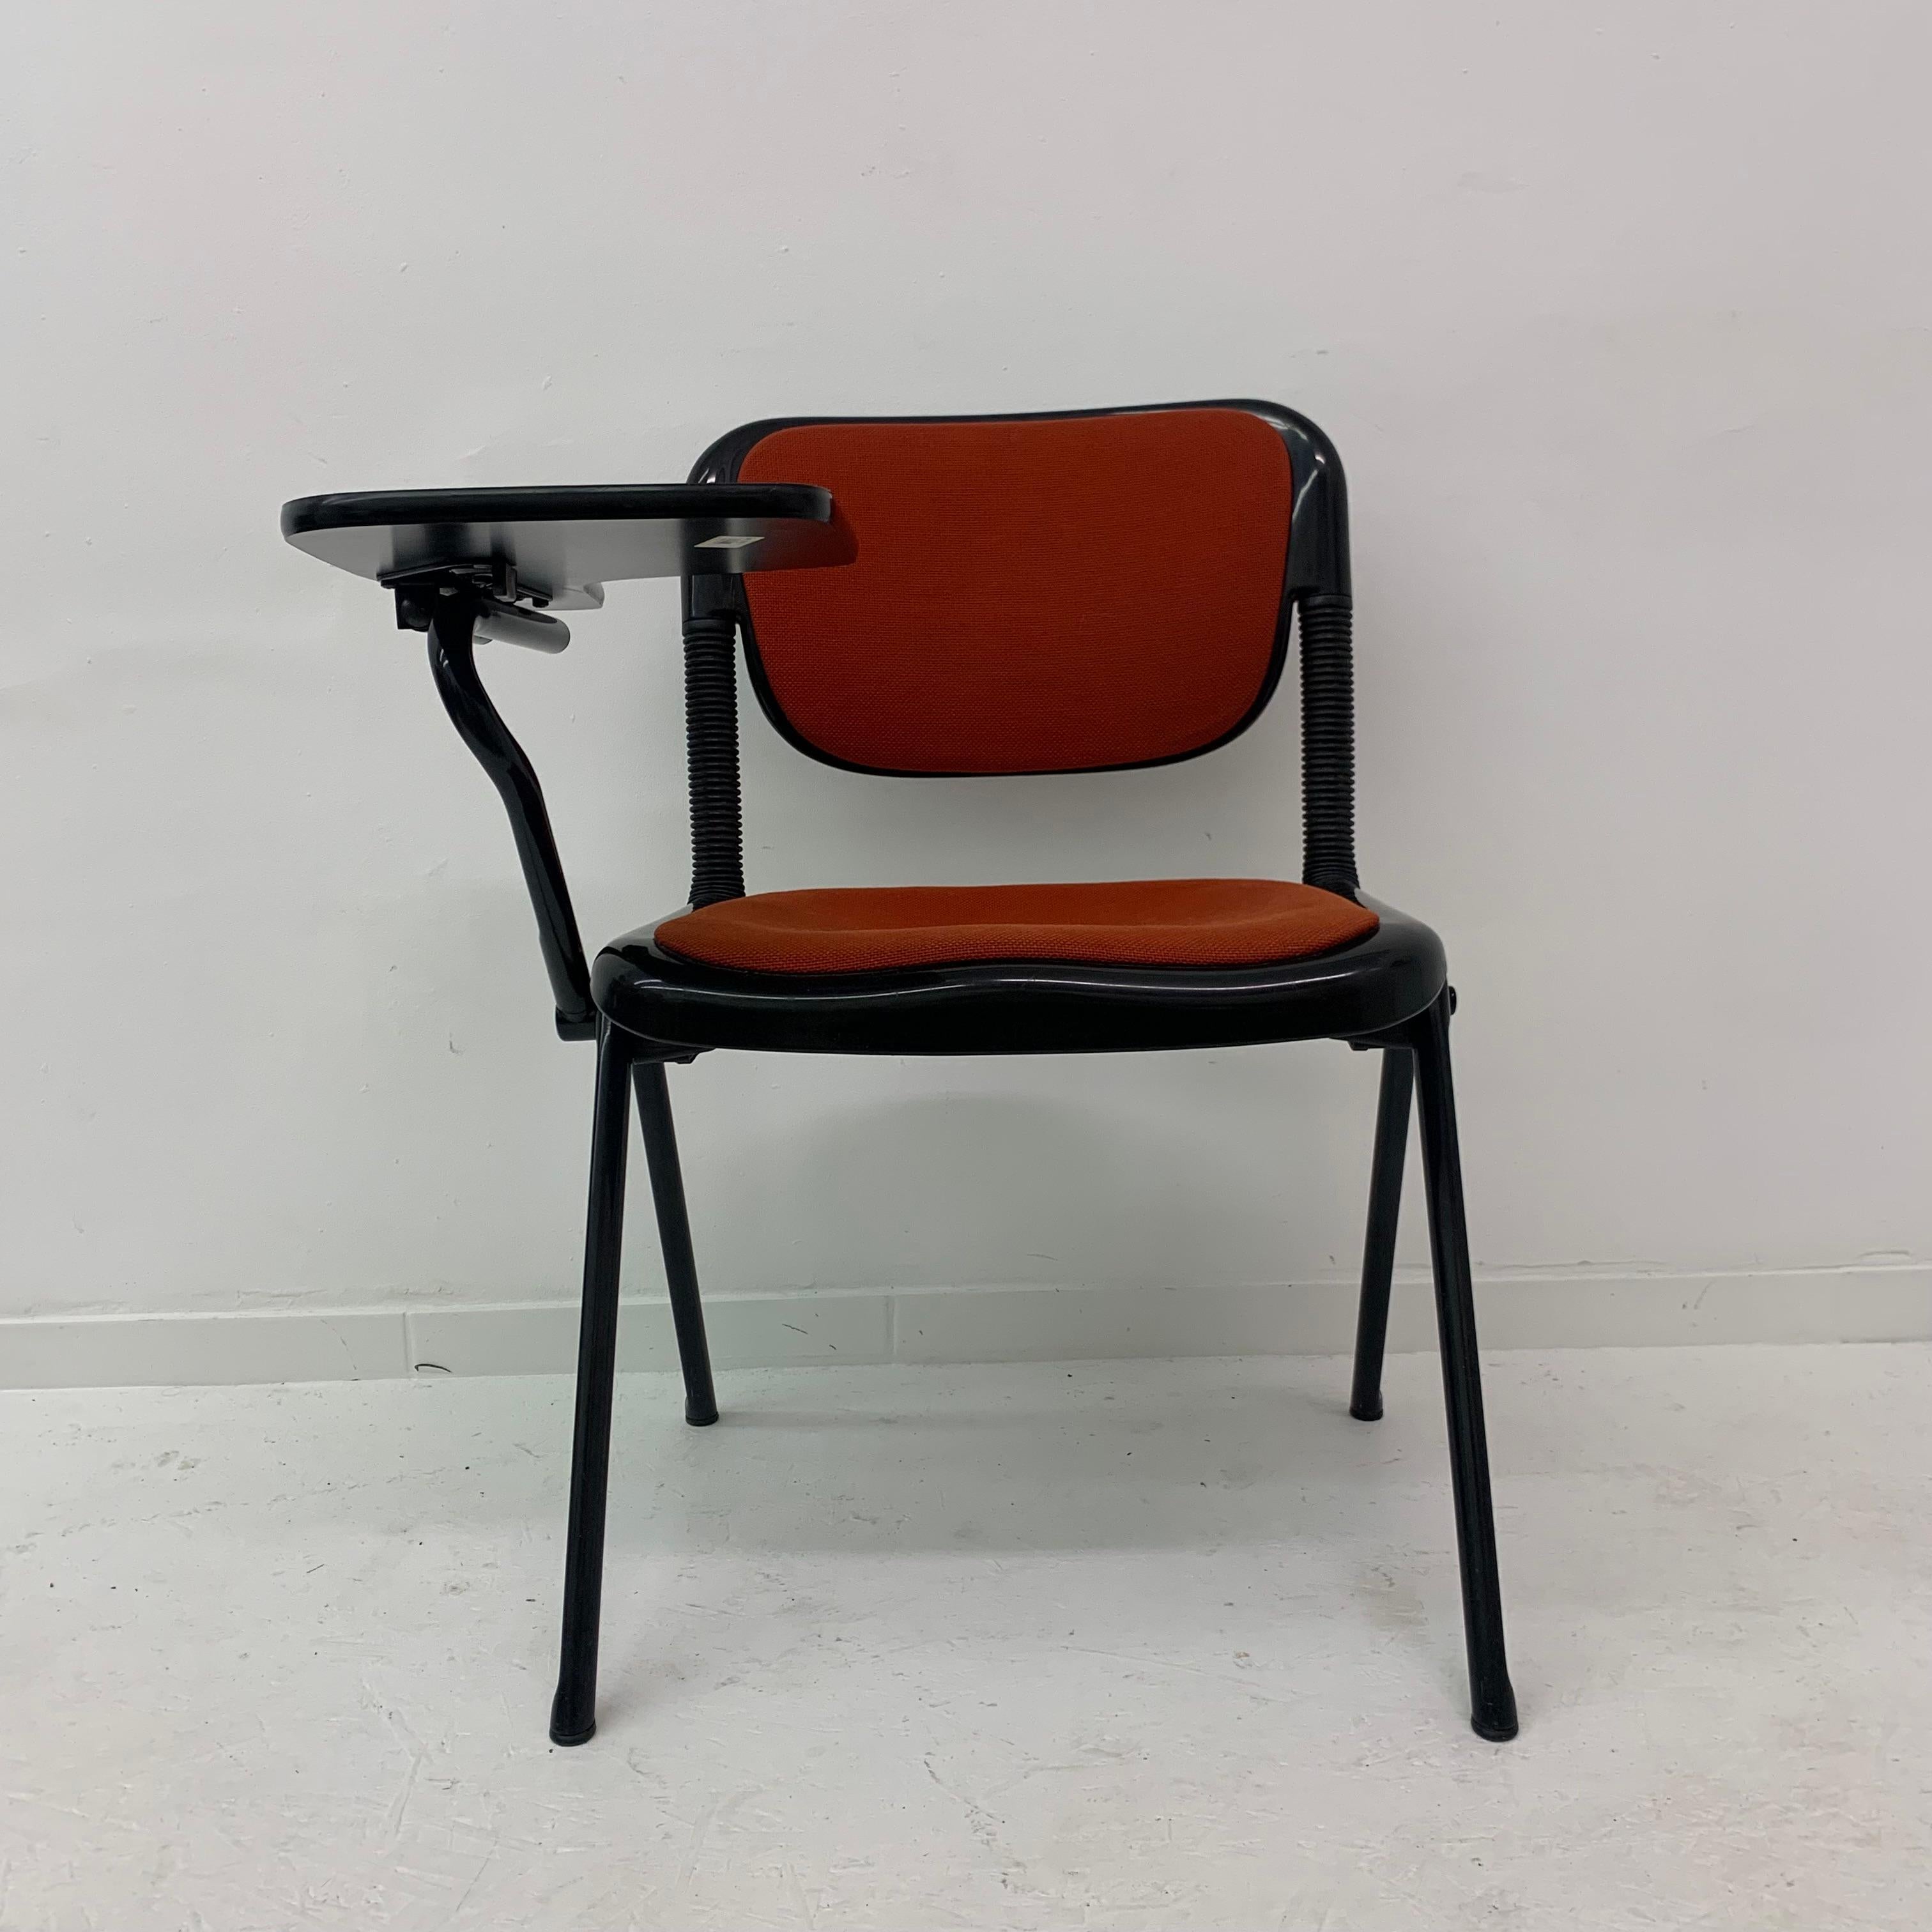 Giancarlo Piretti Vertebra chair for Castelli, 1970s.